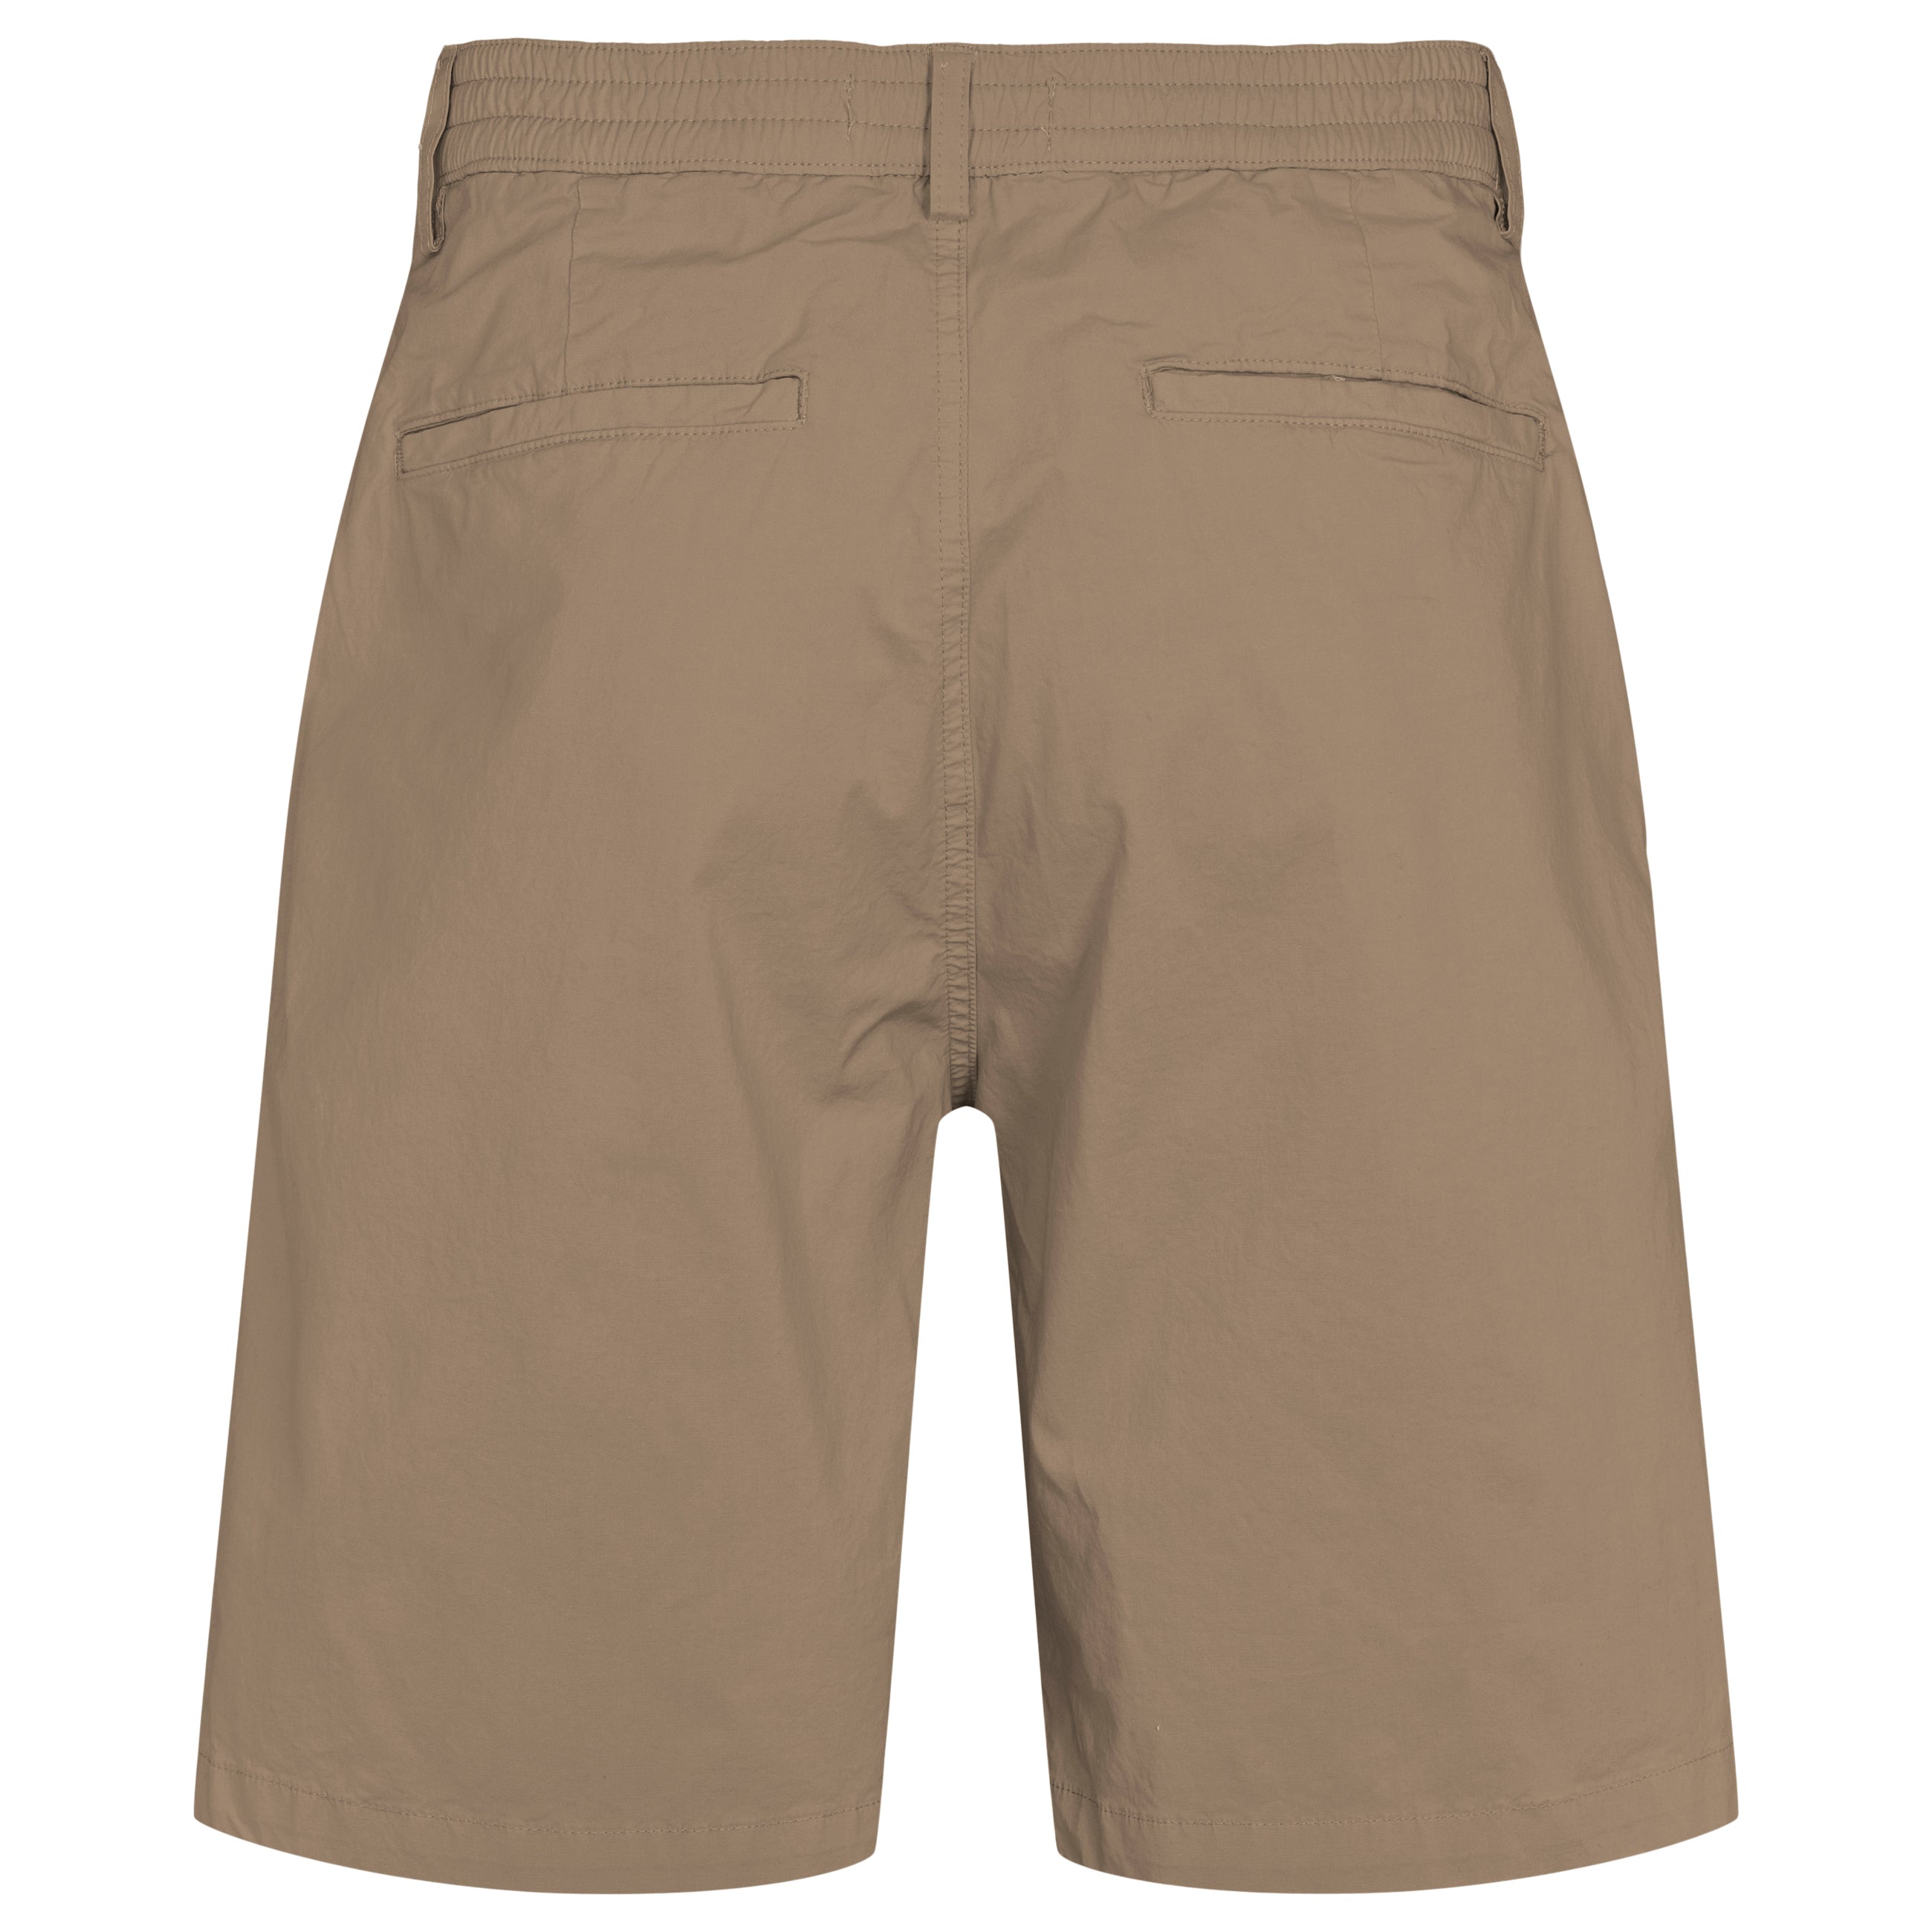 By Garment Makers Gideon Light Cotton Shorts Shorts 2851 Khaki